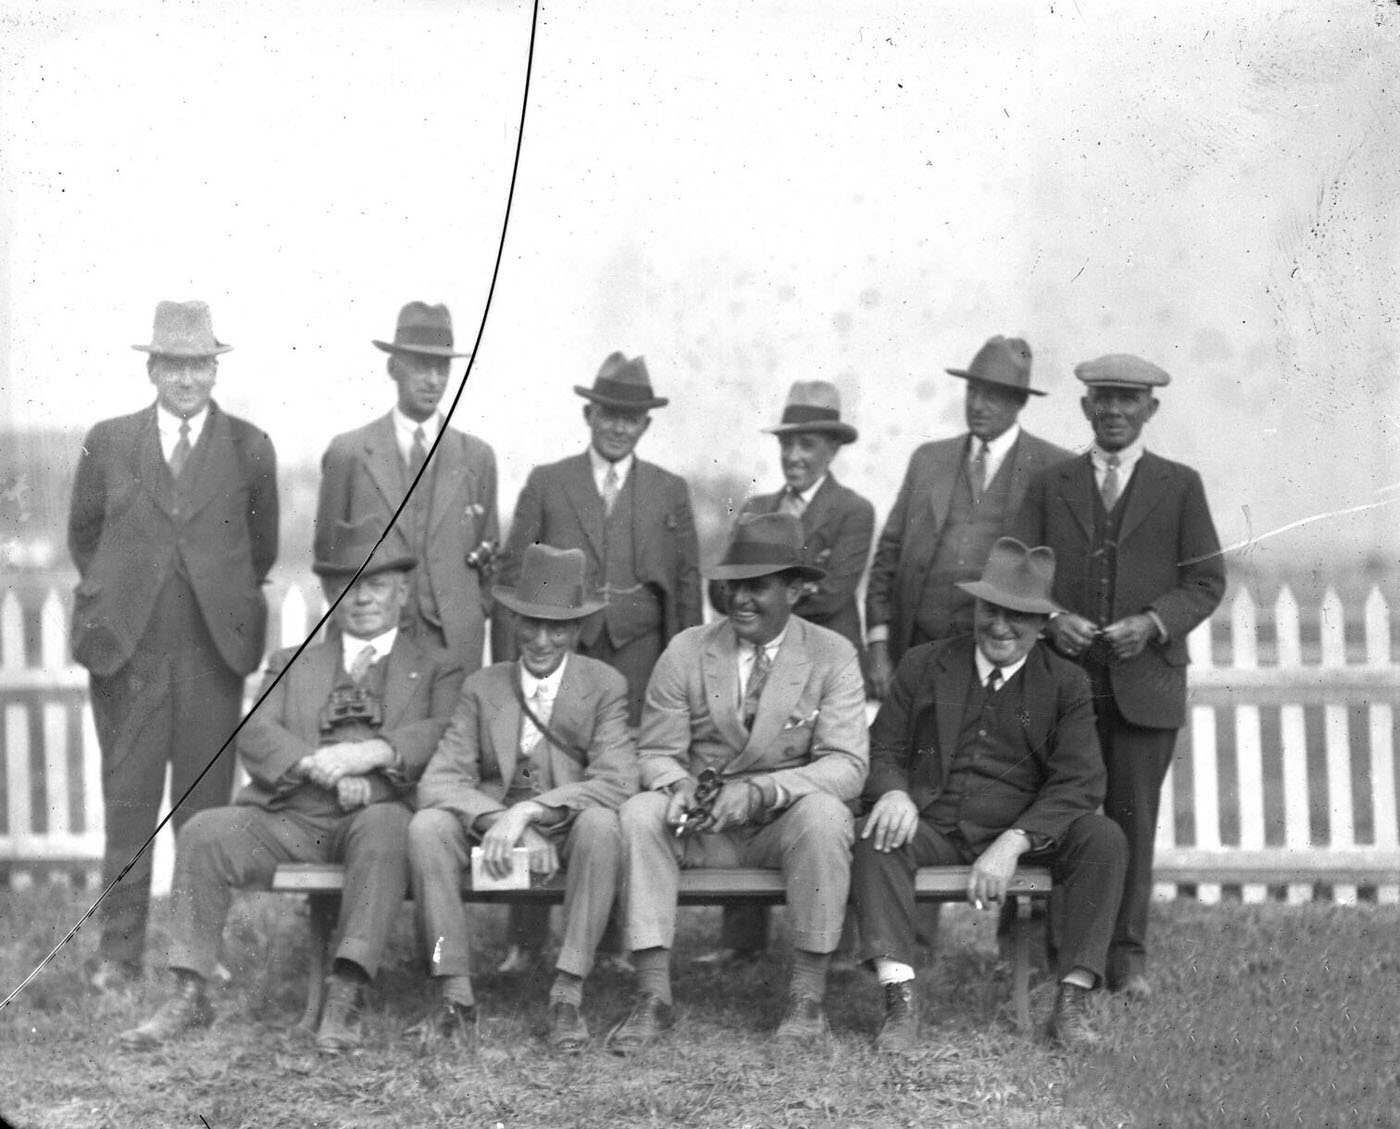 Group portrait of spectators waiting for a race